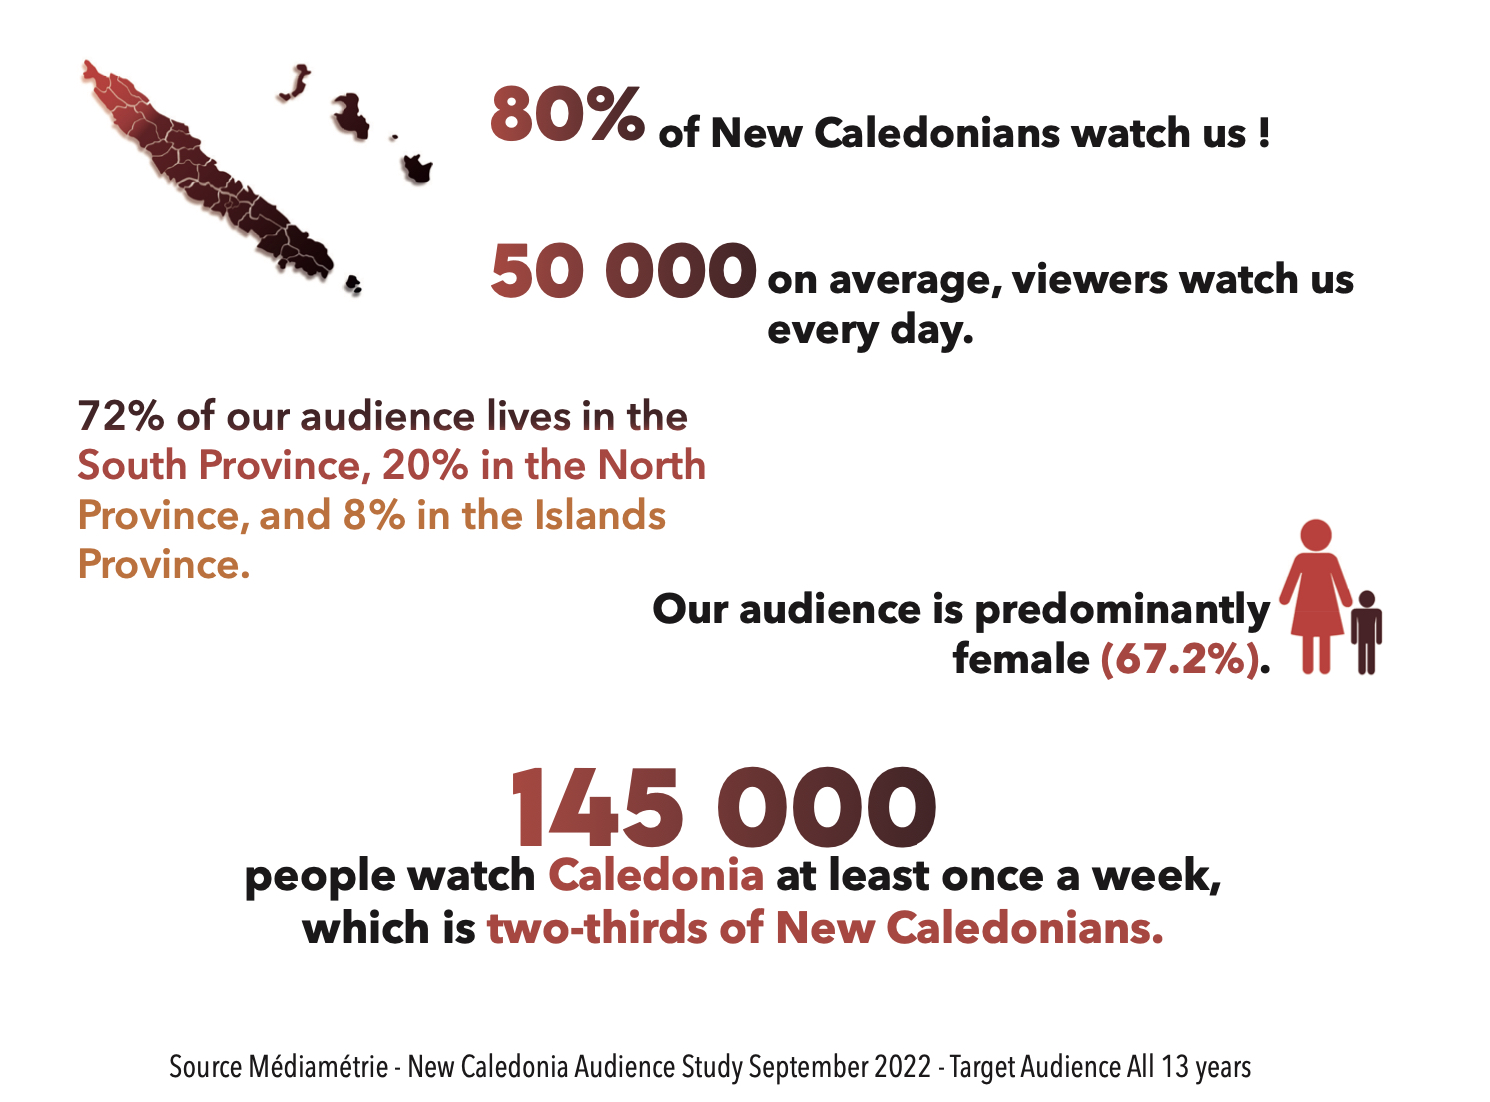 Caledonia in numbers ©Caledonia